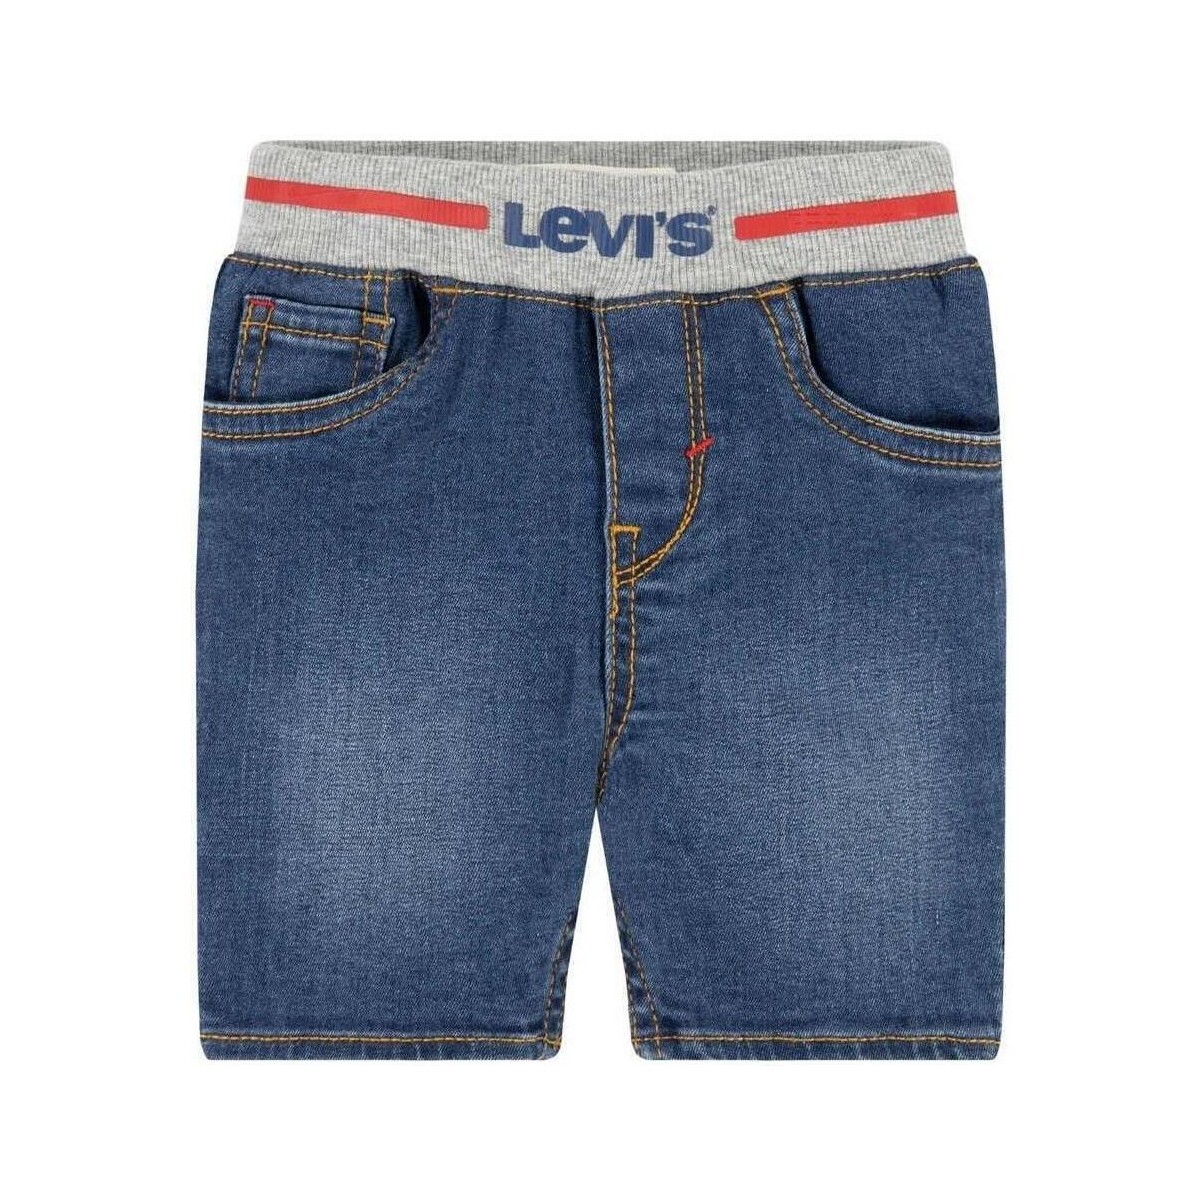 Shorts & Βερμούδες Levis –